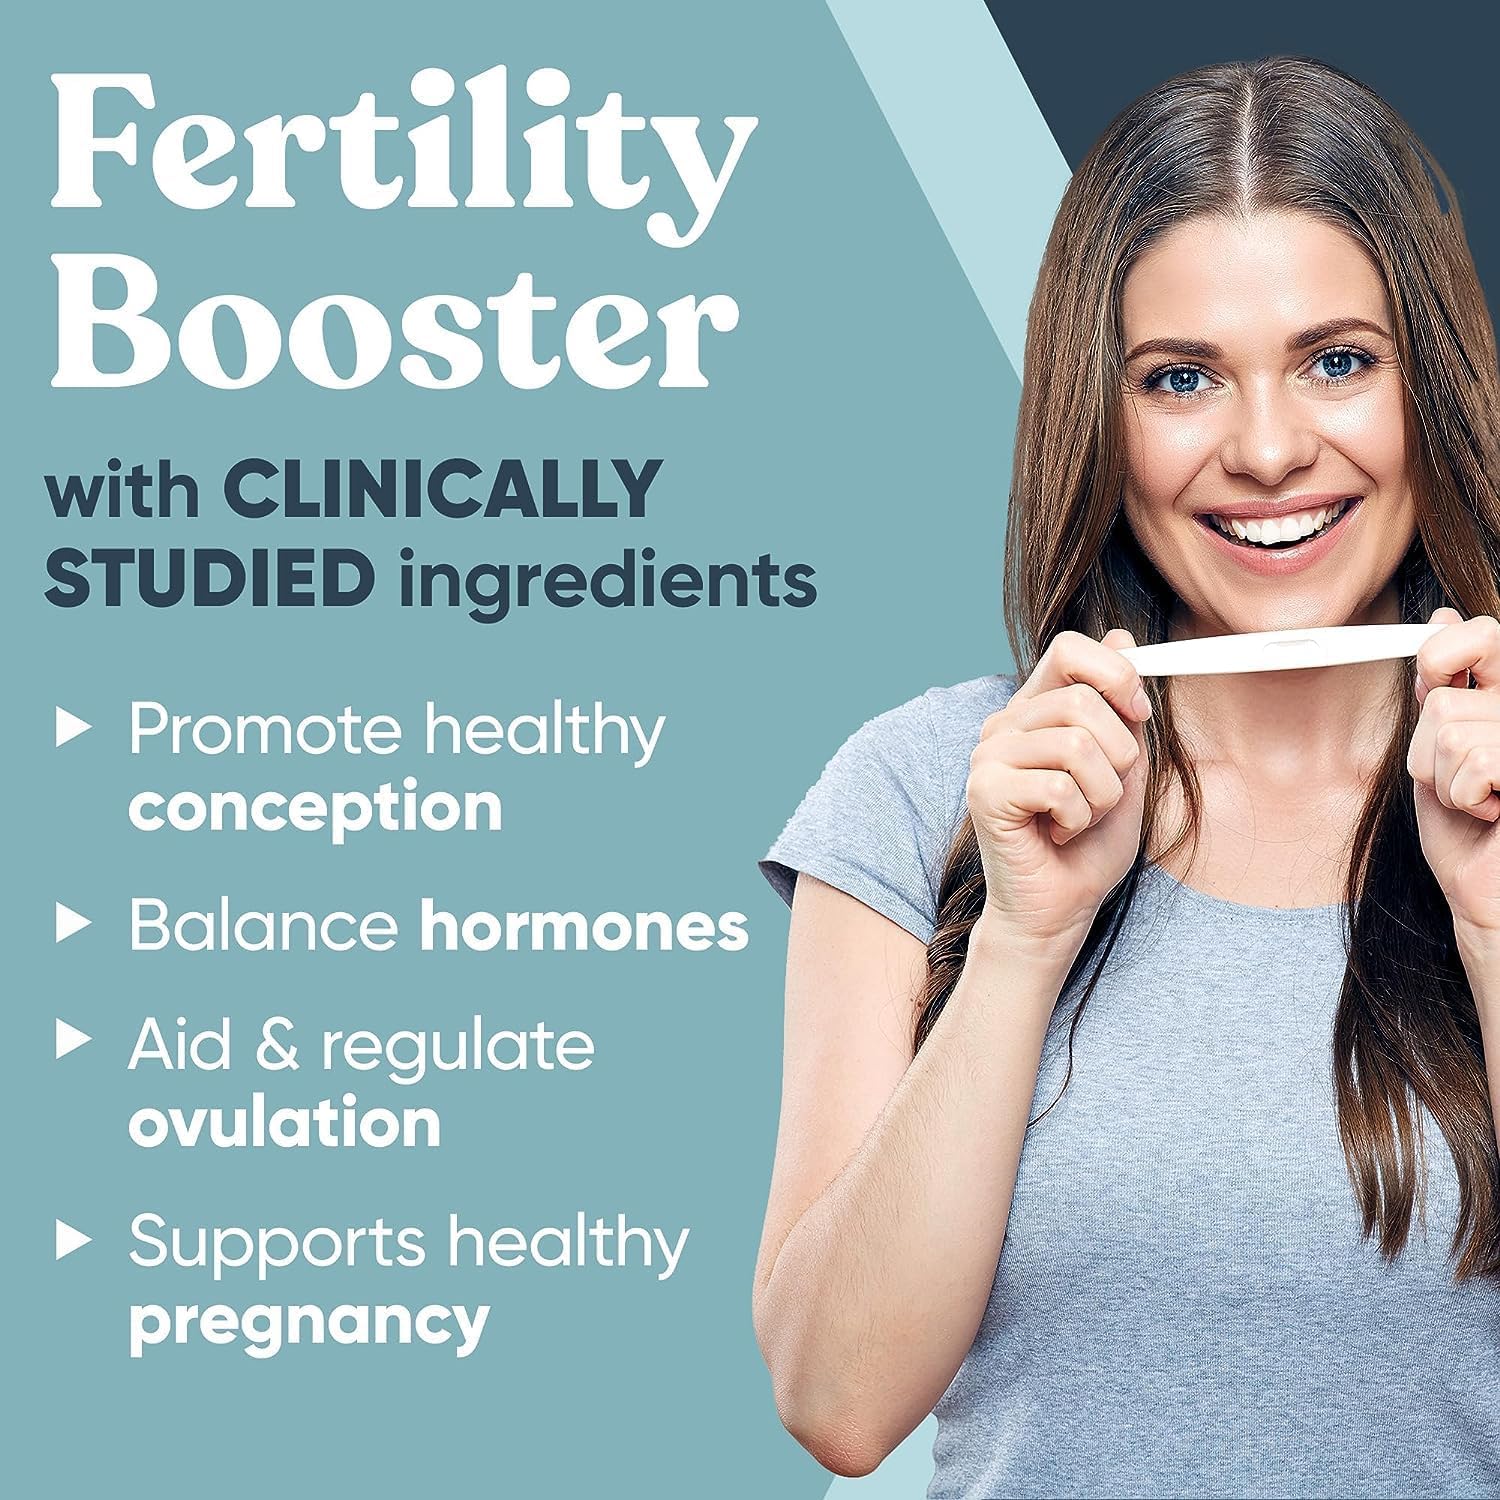 Fertility booster